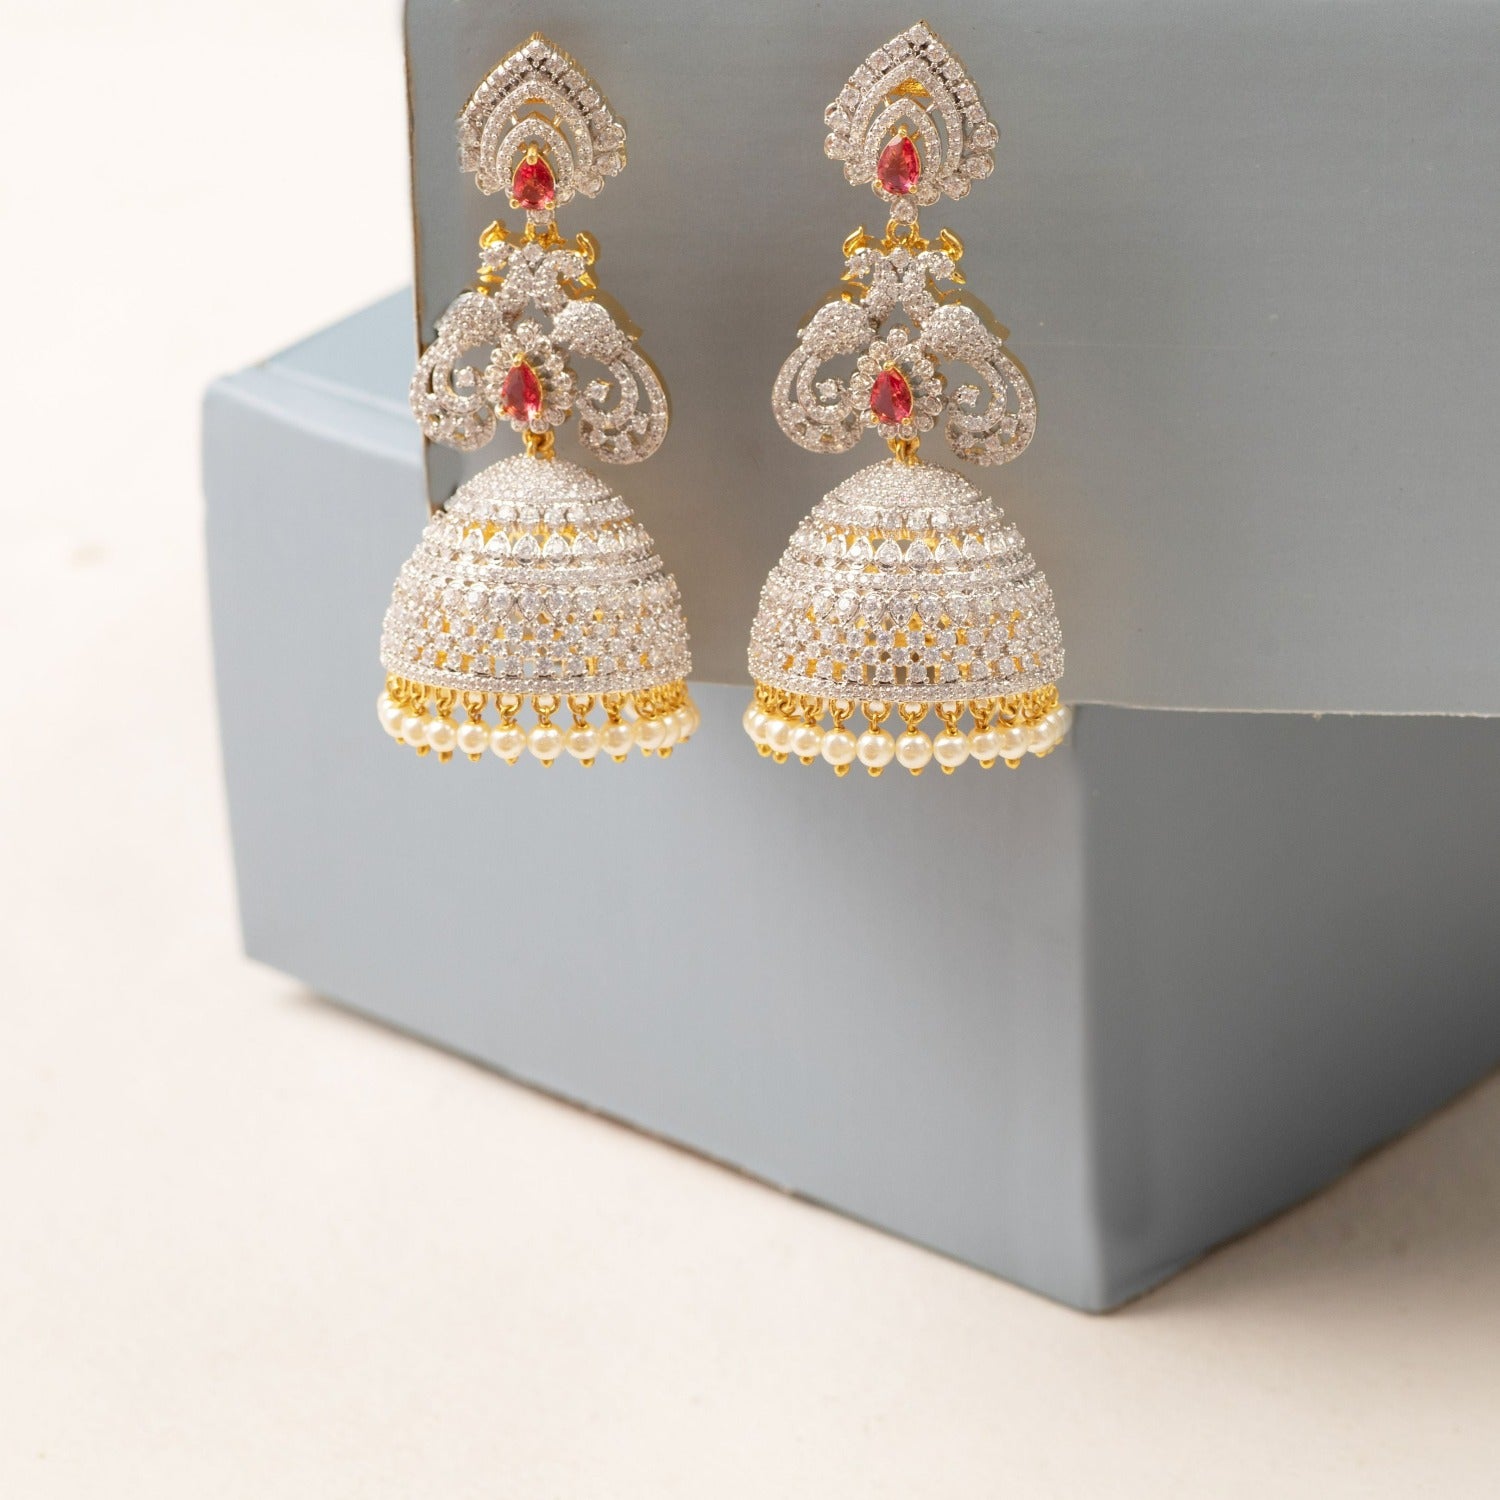 Earrings : Alloy gold plated crystal stone earrings